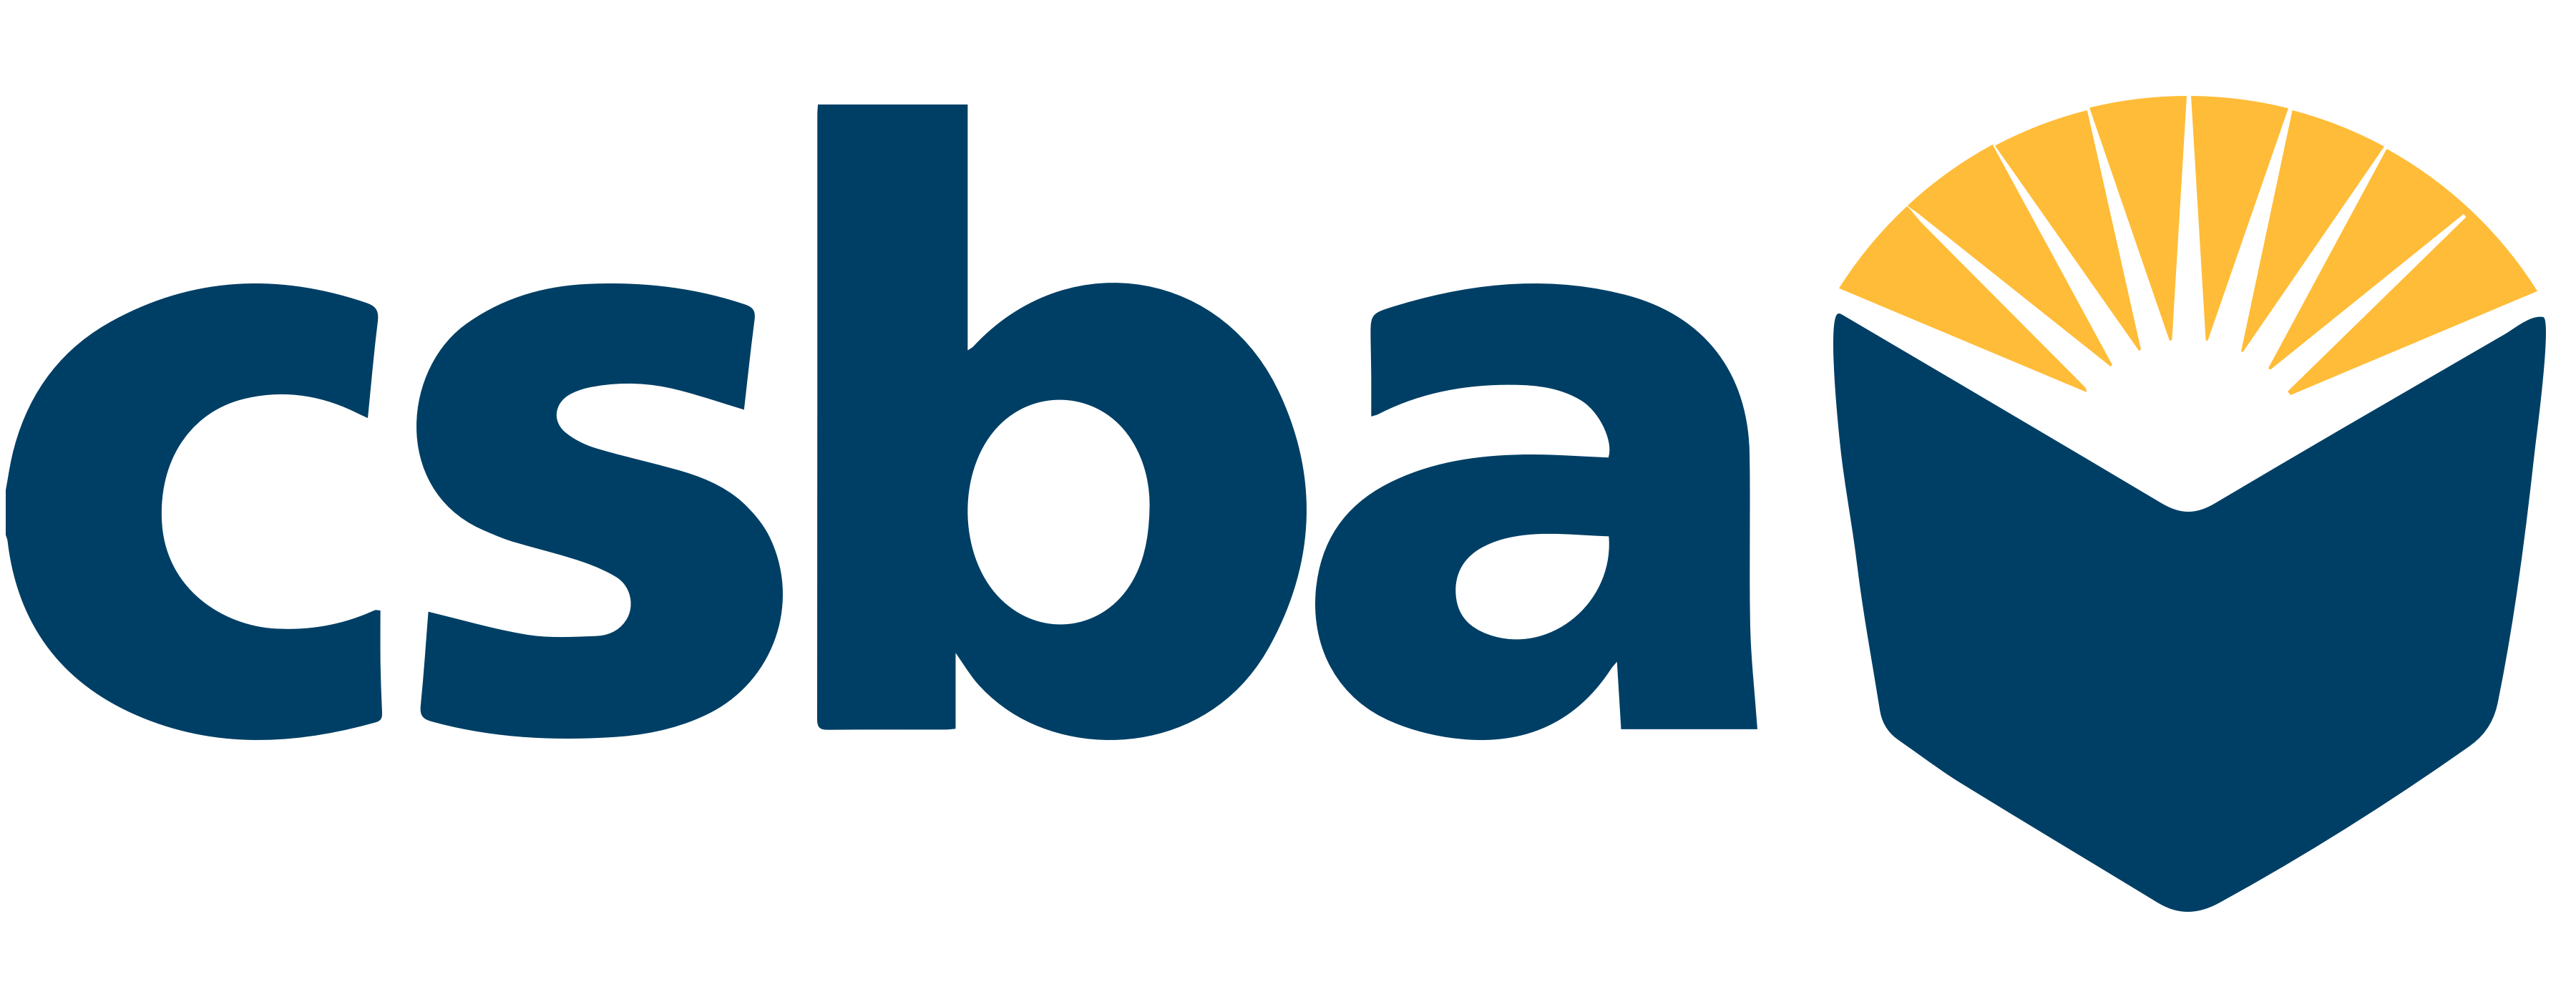 California School Board Association Legal Services logo